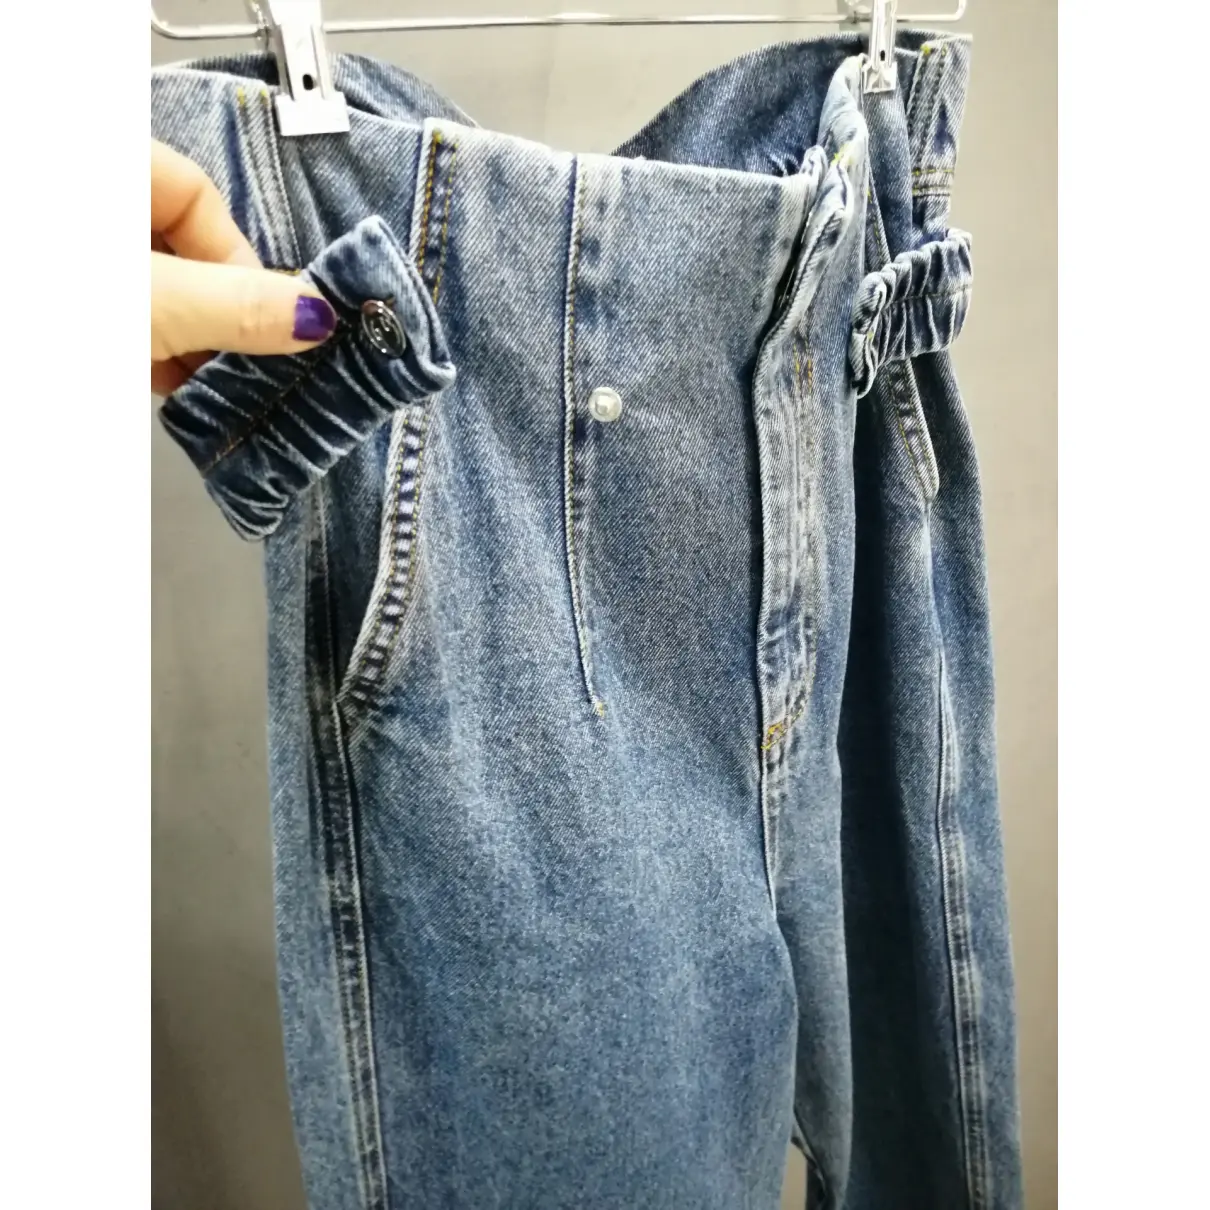 Jeans Remain Biger christensen